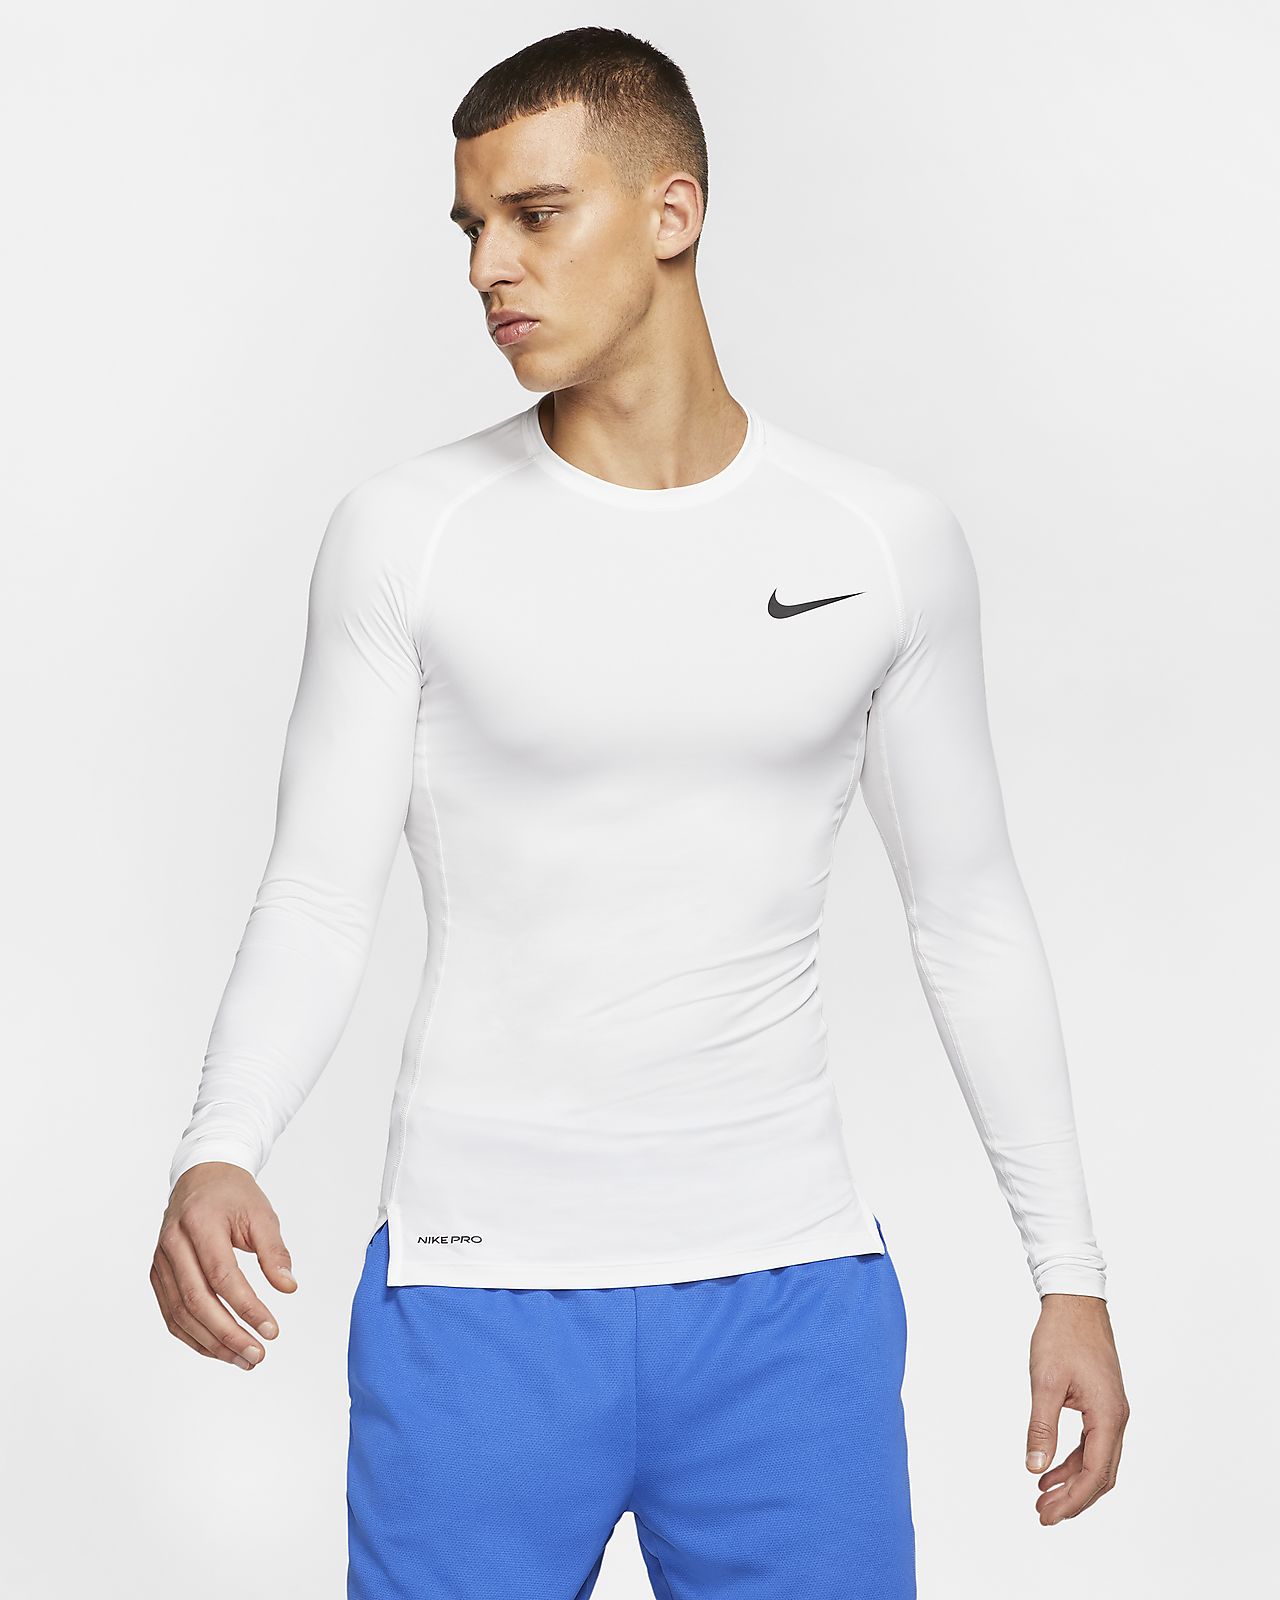 Tight-Fit Long-Sleeve Top. Nike FI